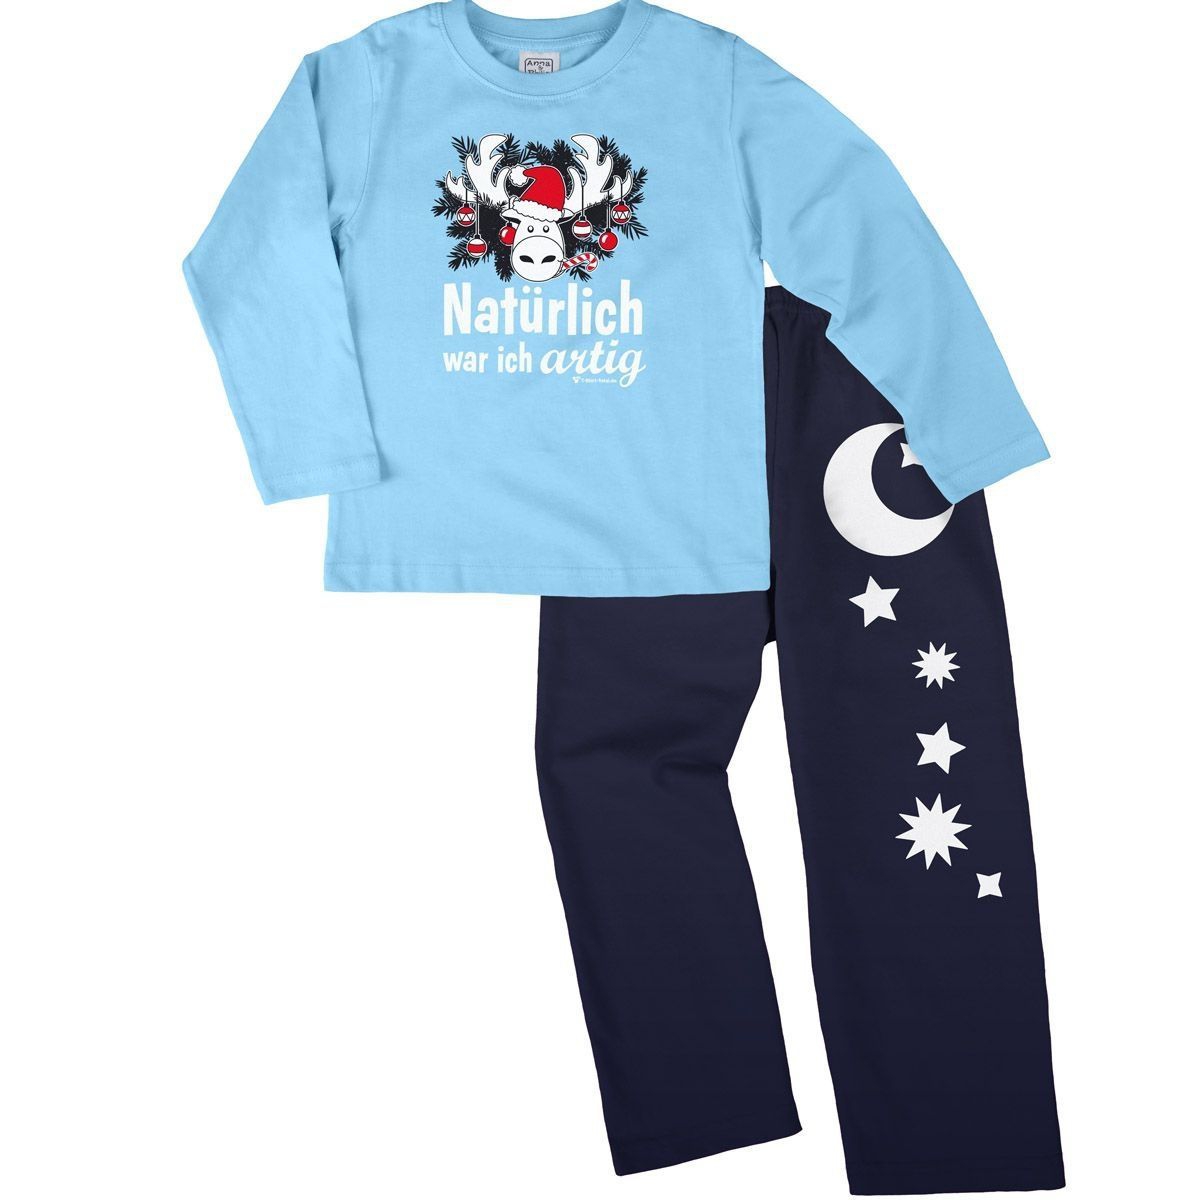 Natürlich artig Pyjama Set hellblau / navy 110 / 116